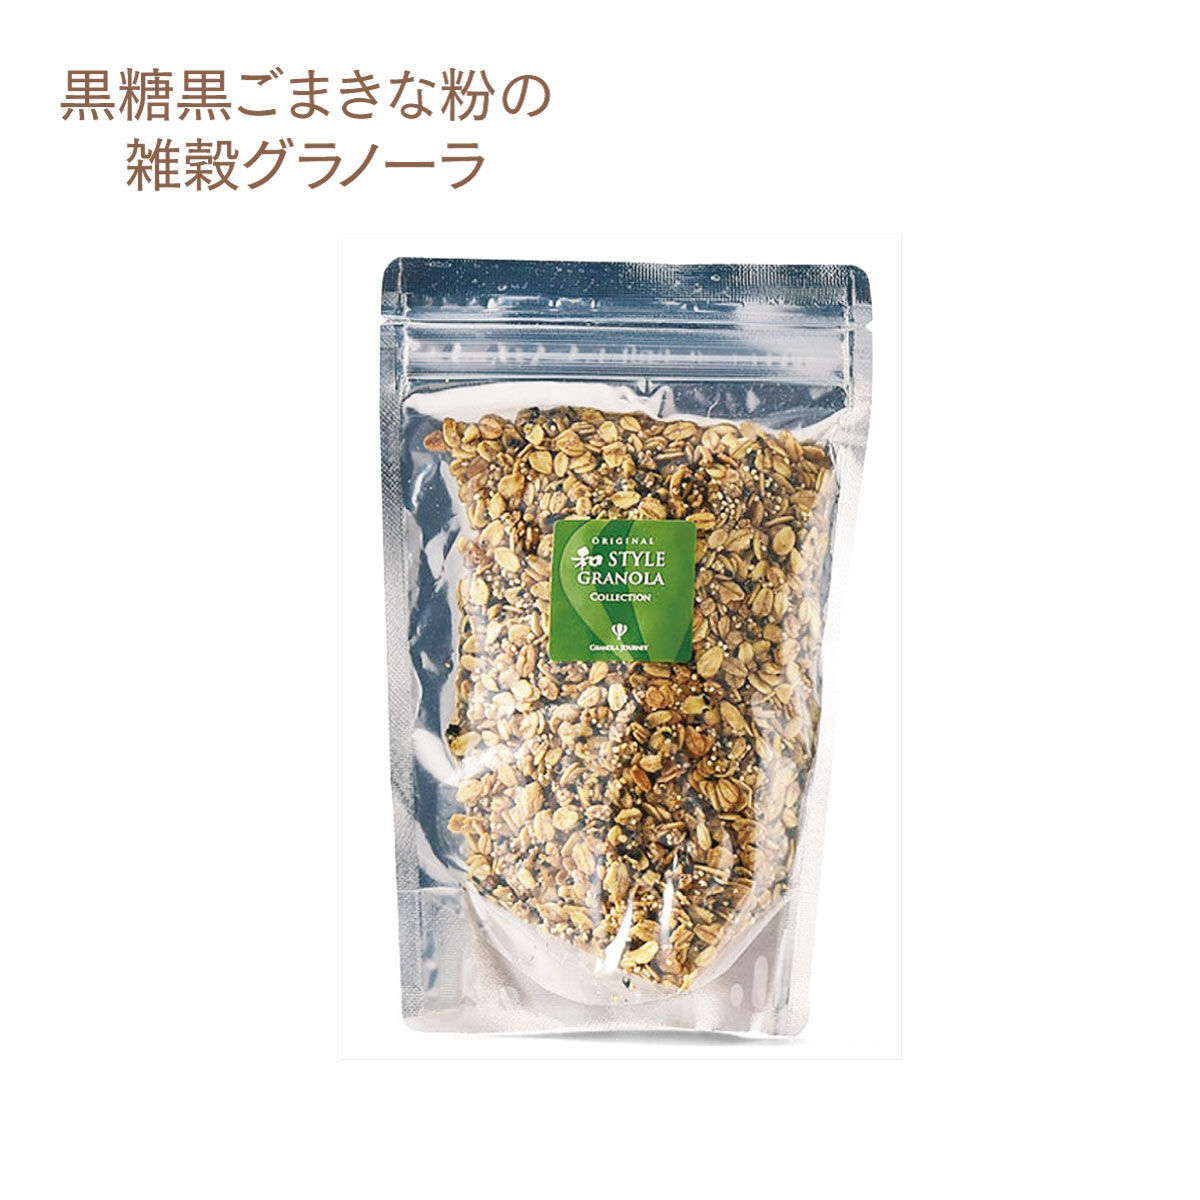 FELISSIMO PARTNERS | 神戸グラノラジャーニー 黒糖黒ごまきな粉の雑穀 グラノーラ